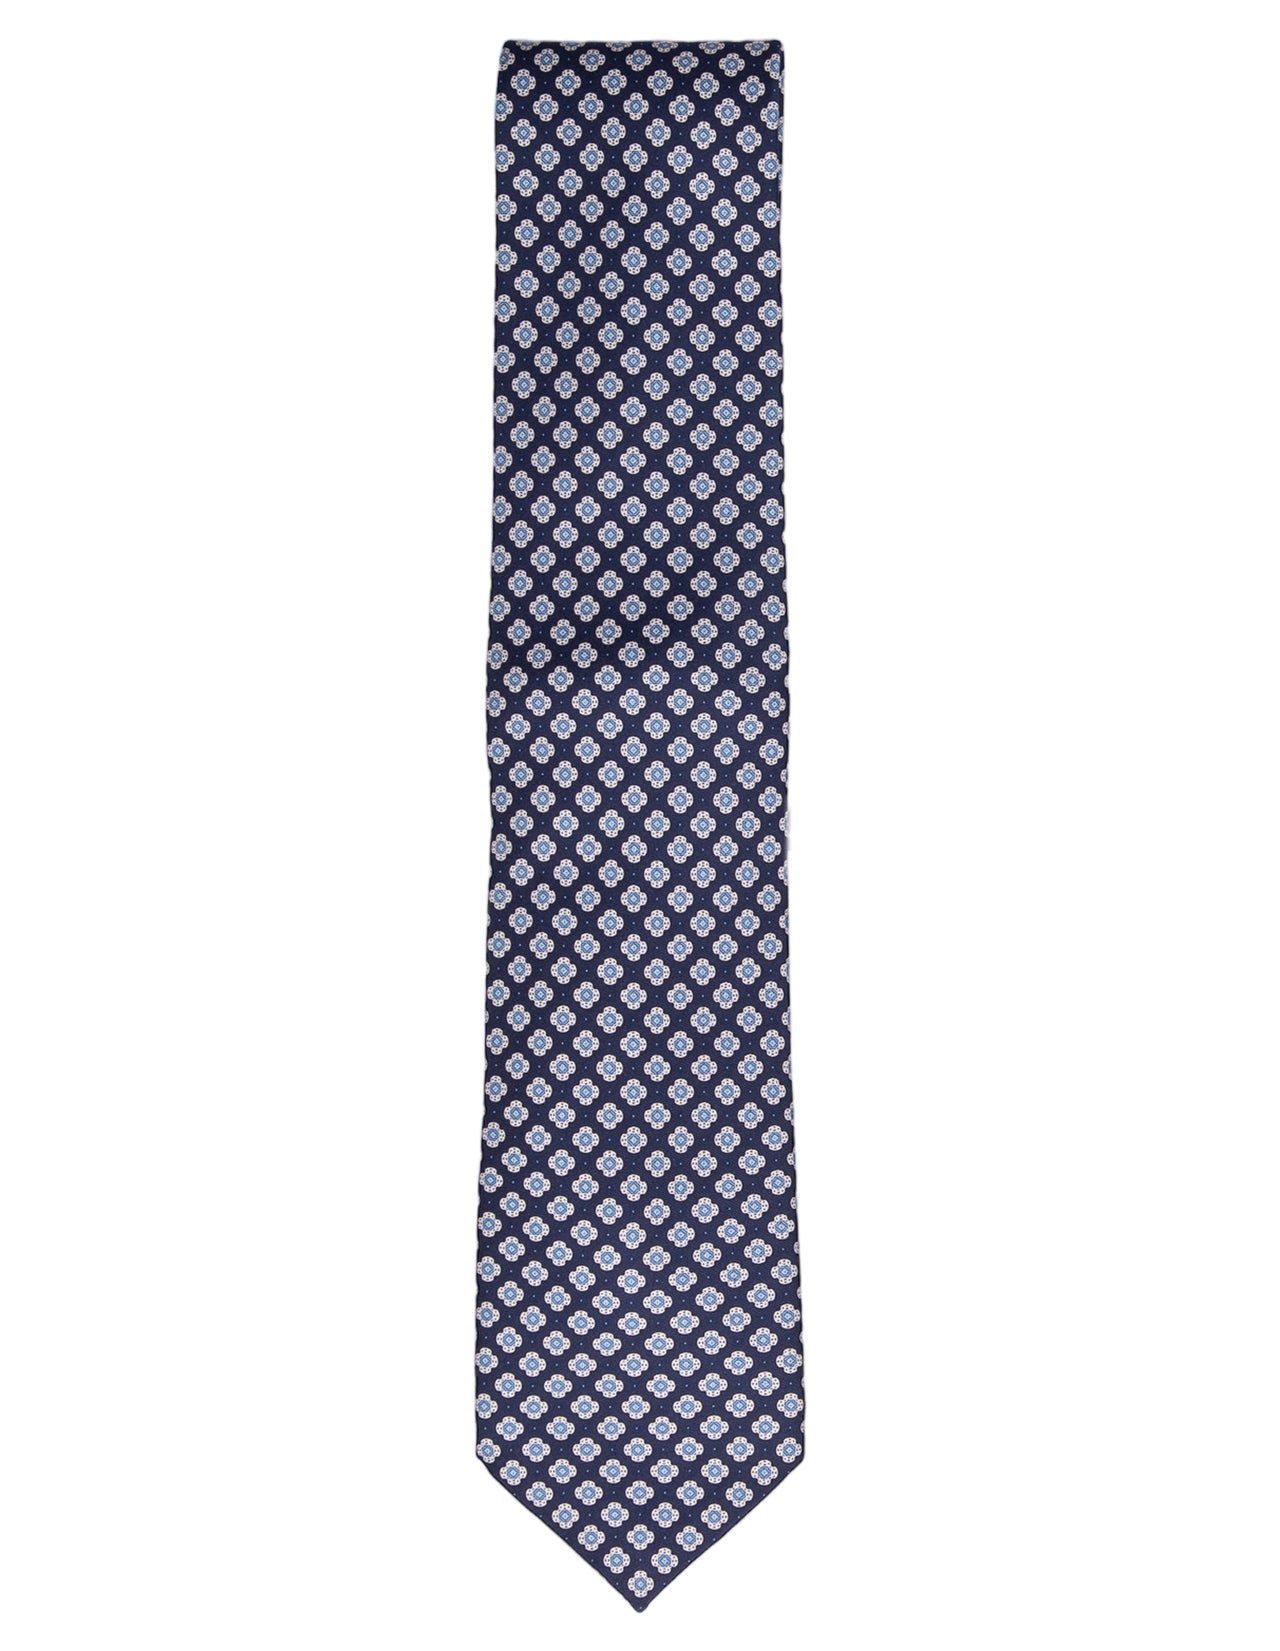 STEFANO RICCI Silk Tie & Pocket Square Set NAVY/WHITE/BLUE